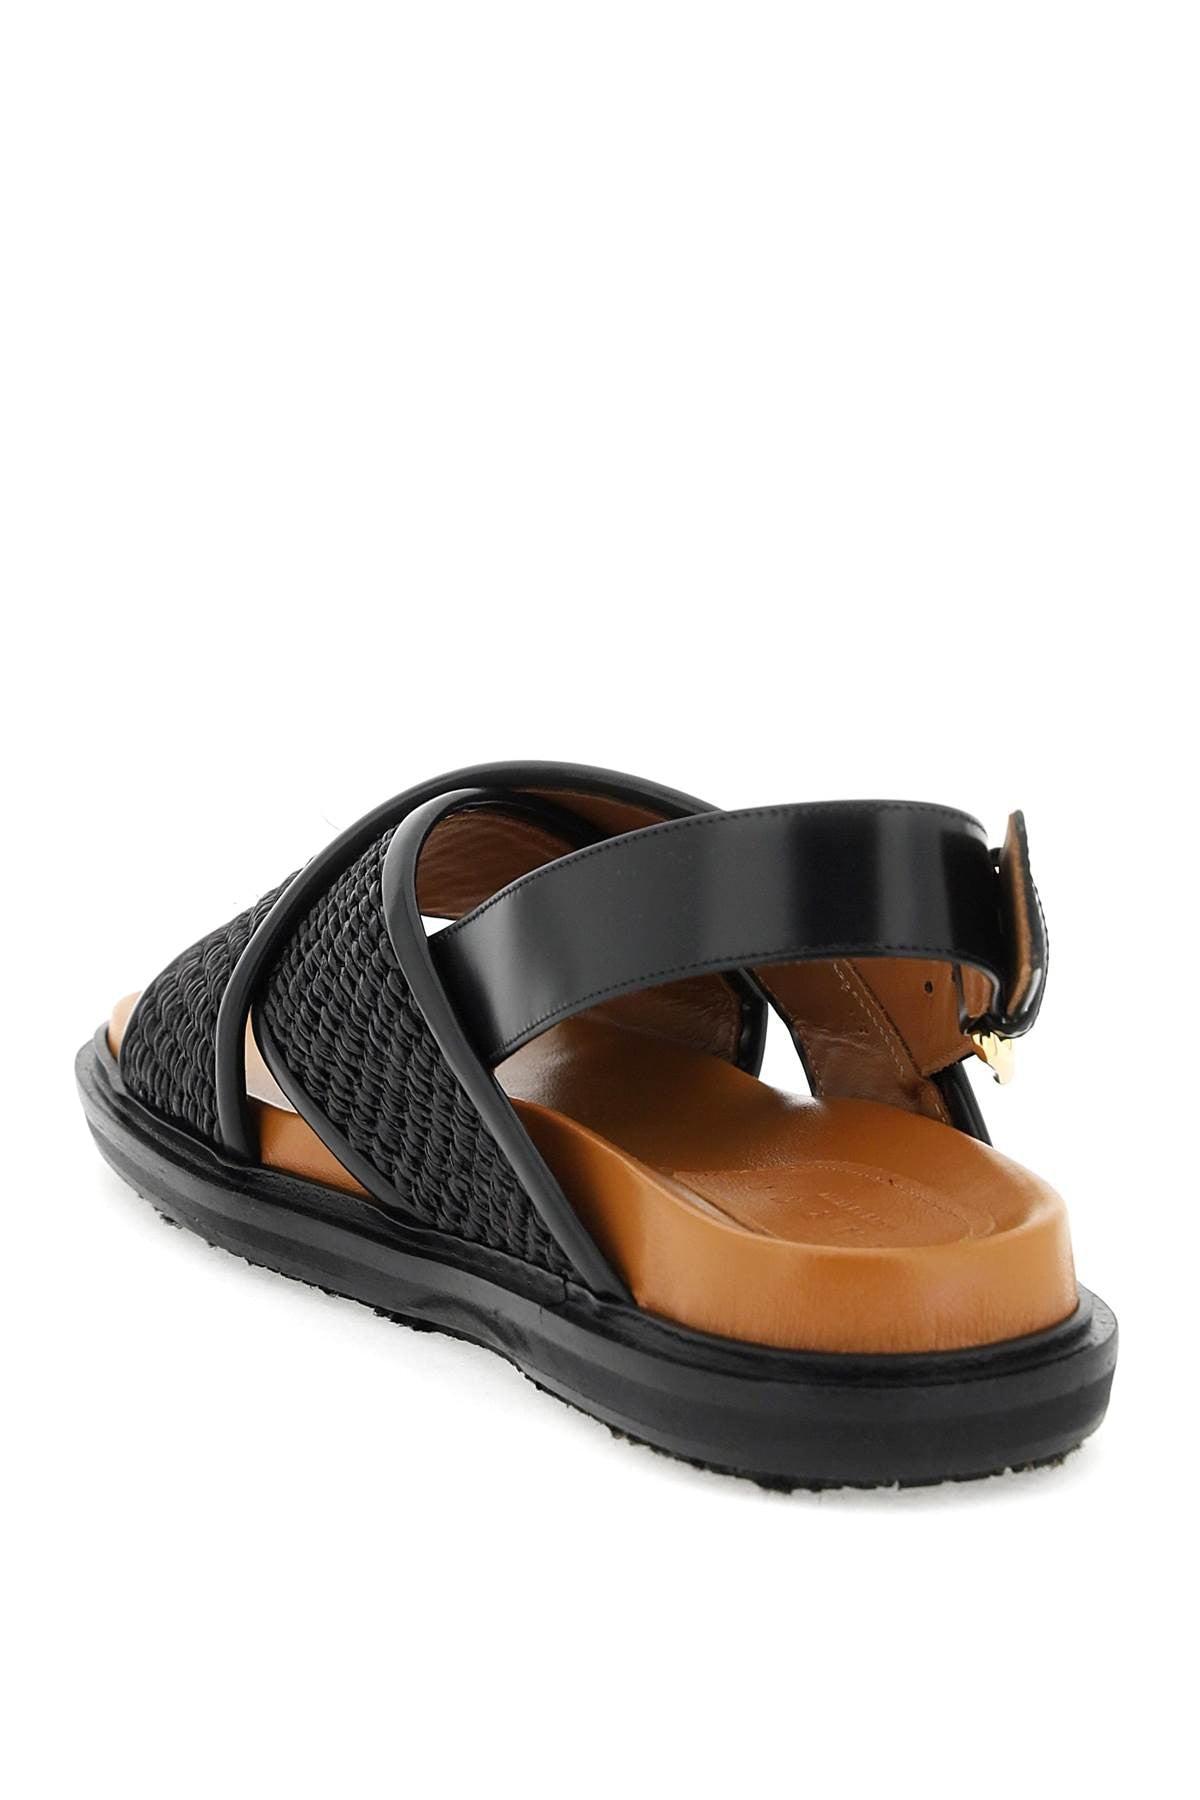 Marni Leather And Raffia Fussbett Sandals in Black | Lyst